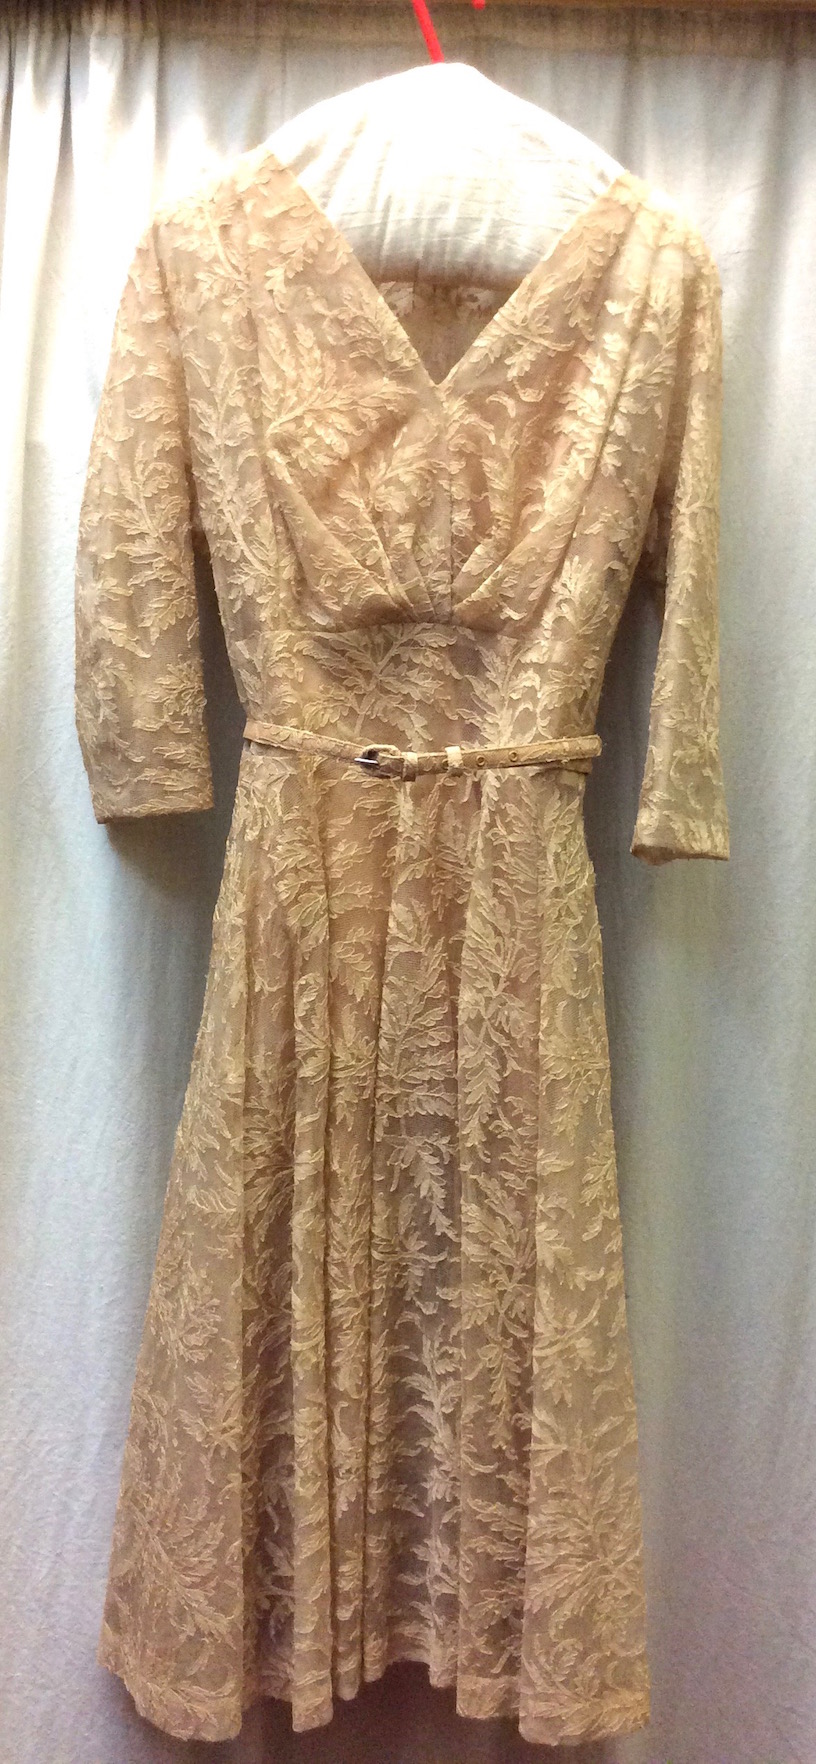 Misses Mooney dress 1950's front